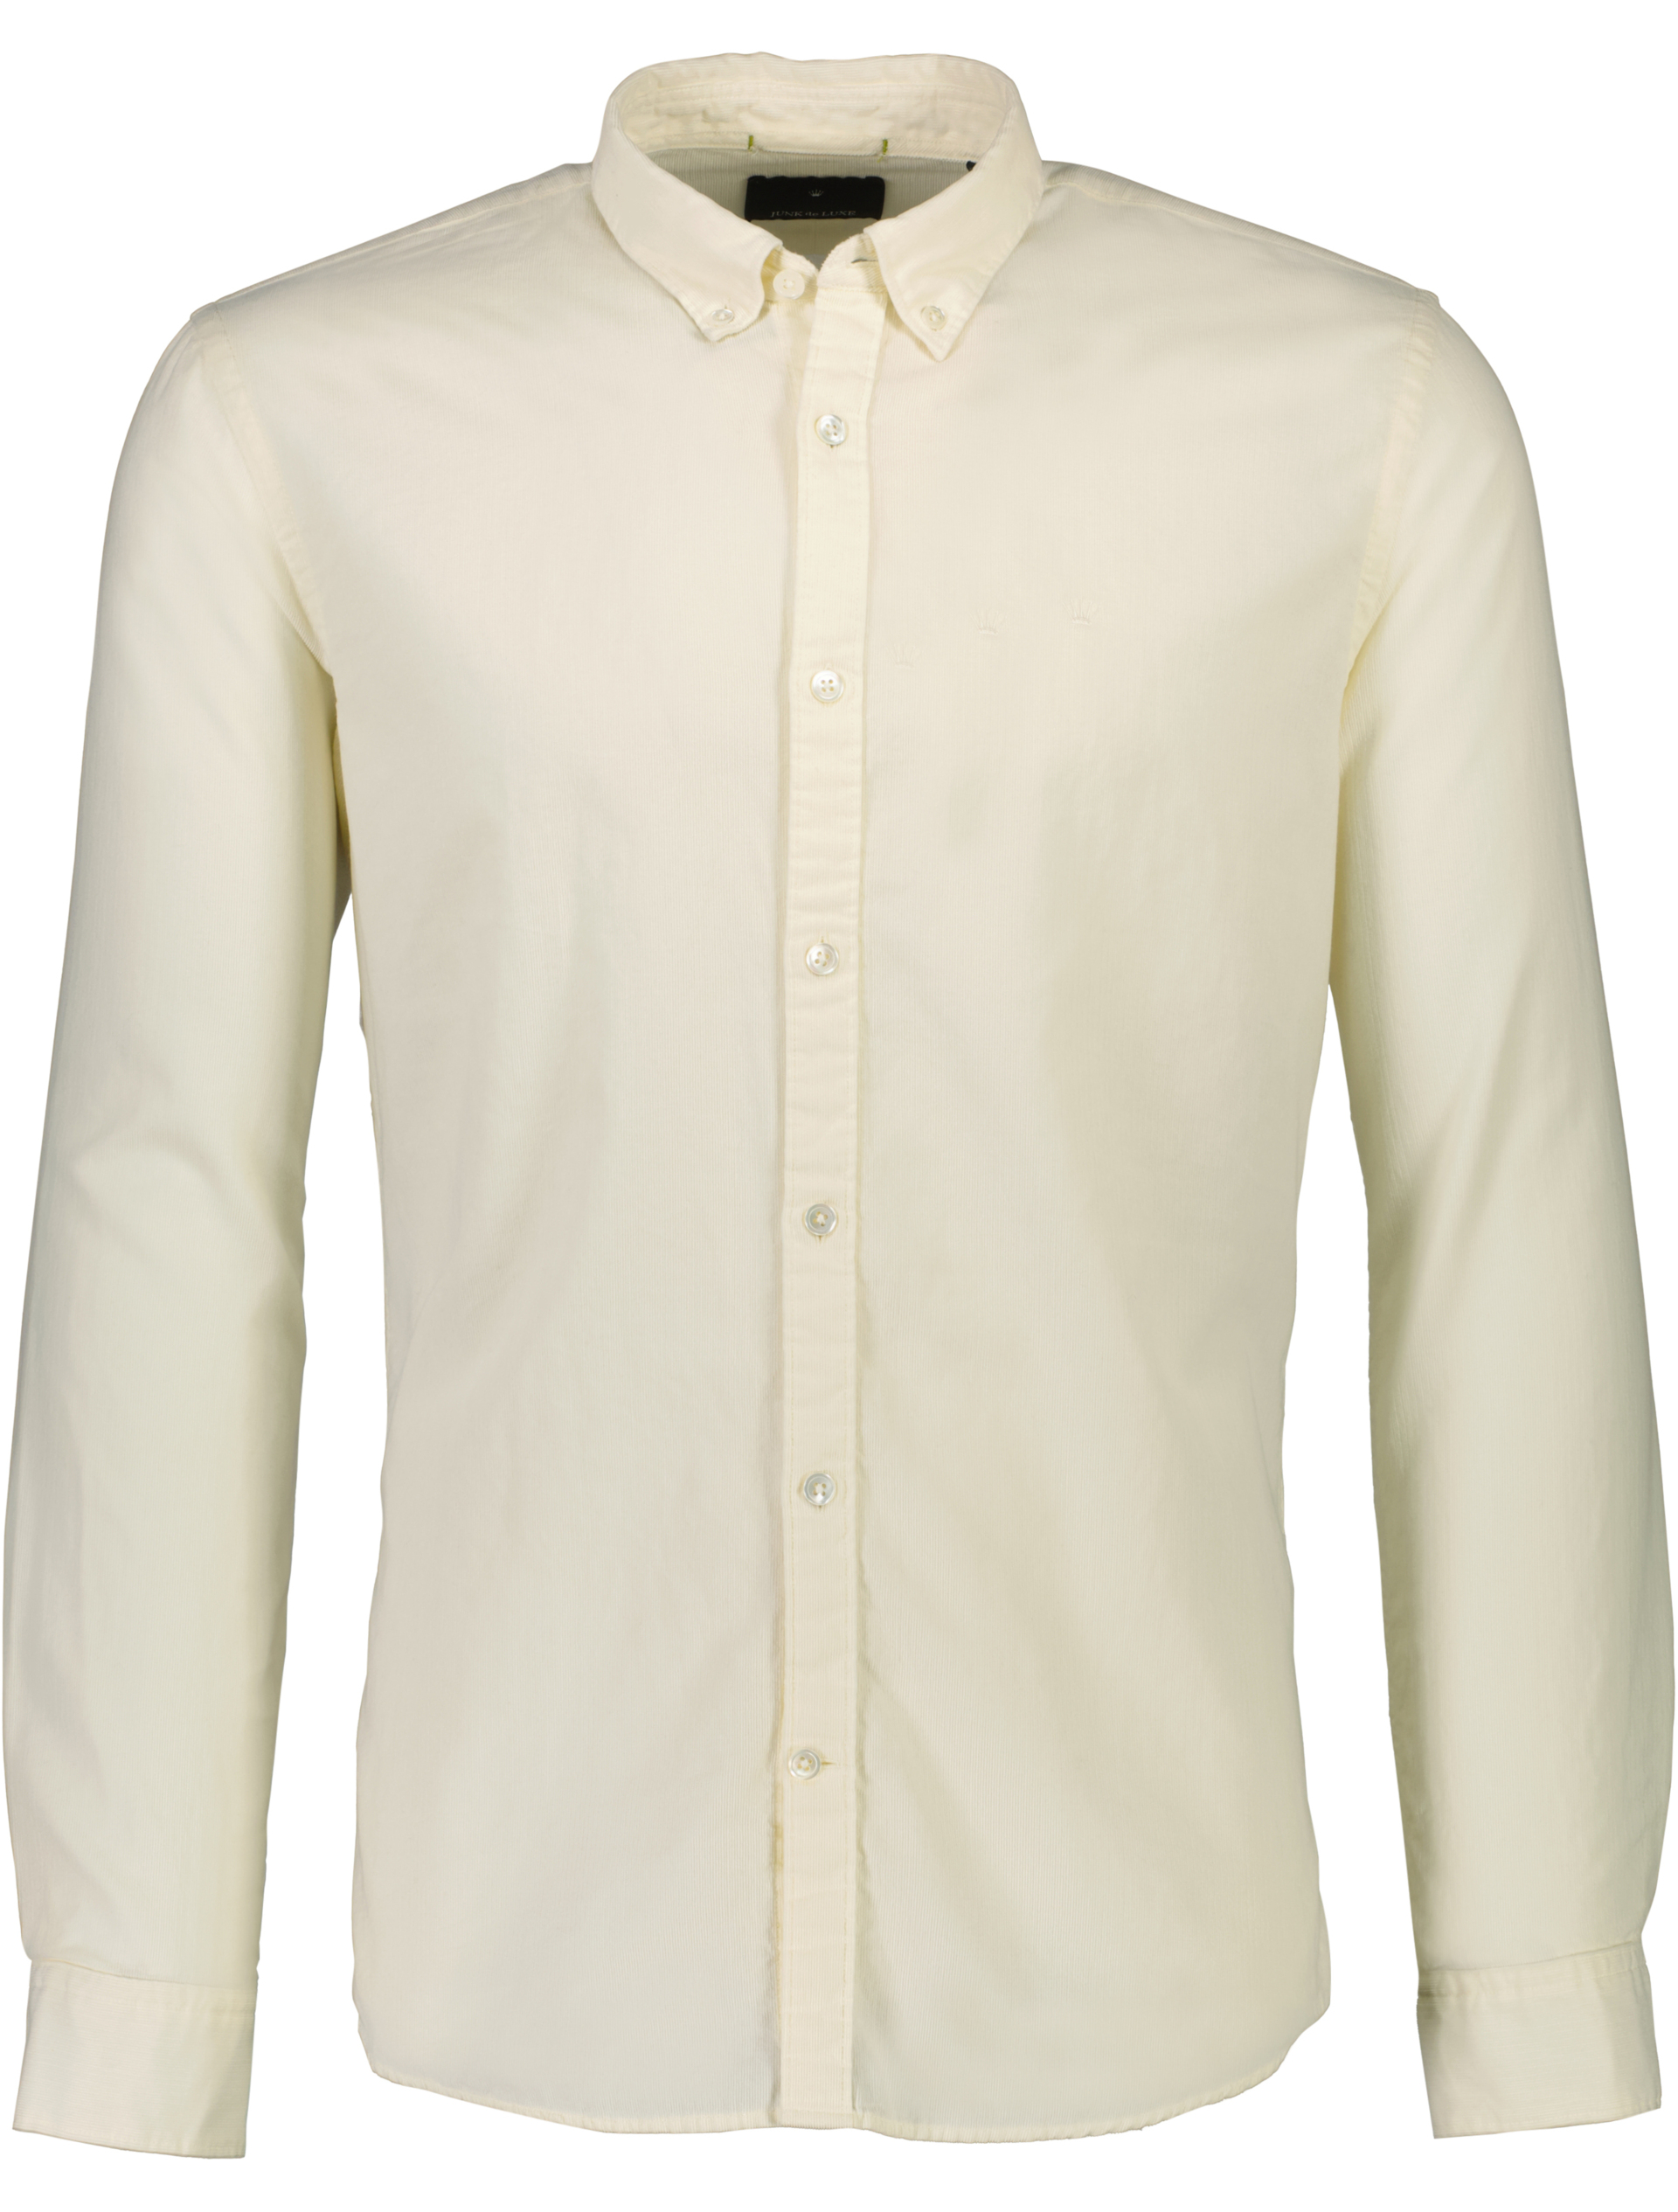 Junk de Luxe Corduroy shirt white / ivory white